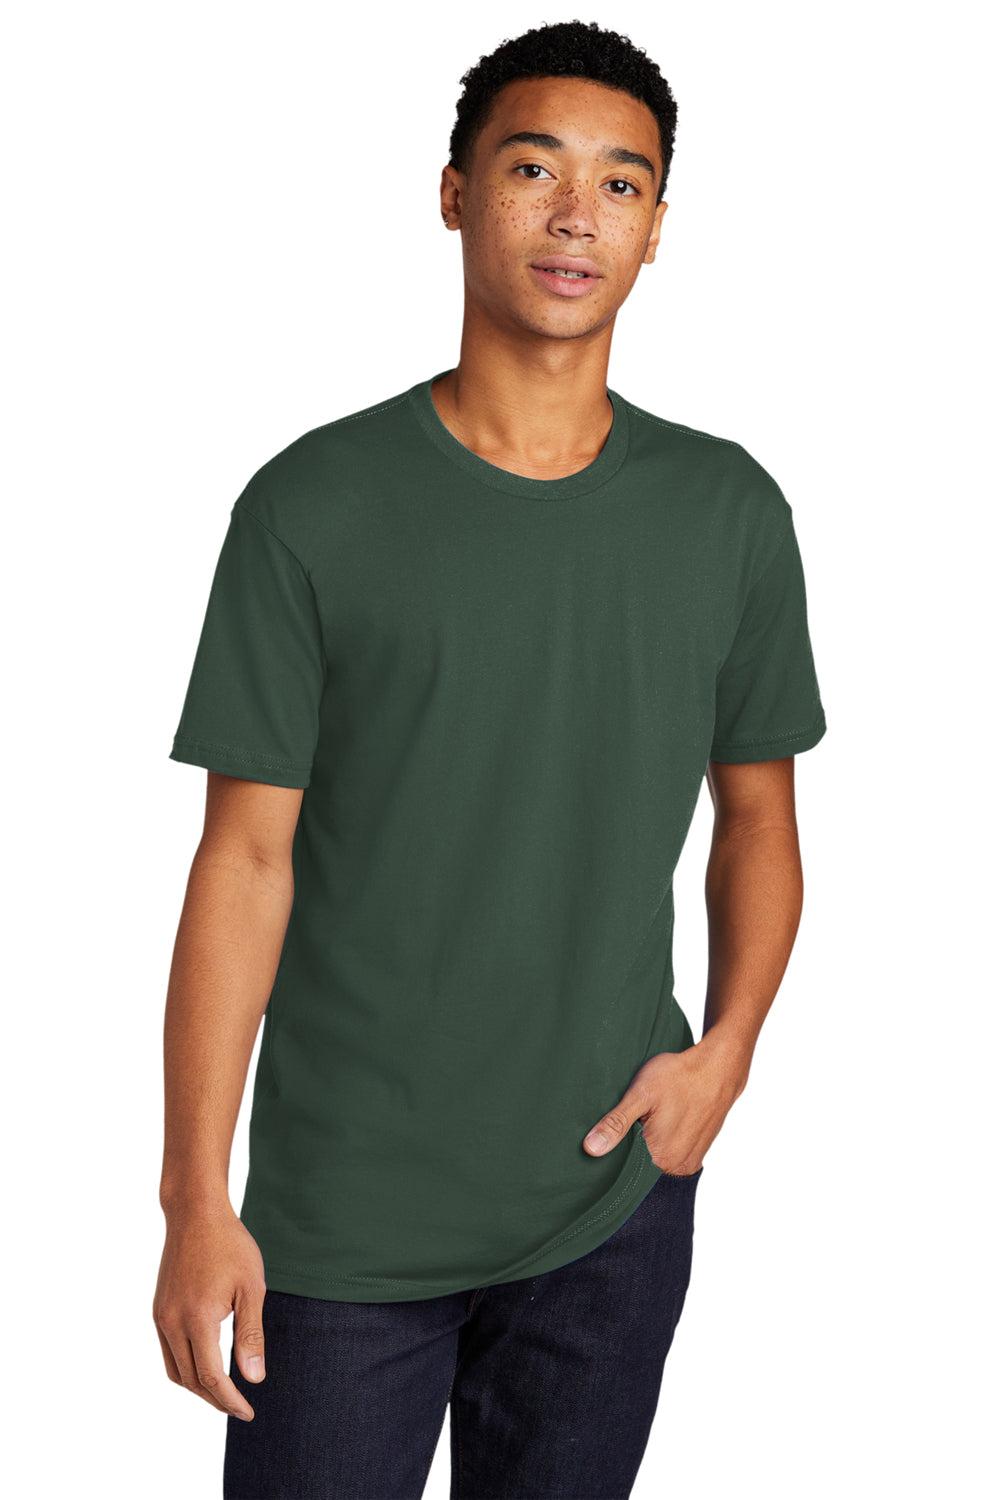 Next Level NL3600/3600 Mens Fine Jersey Short Sleeve Crewneck T-Shirt Royal Pine Green Front